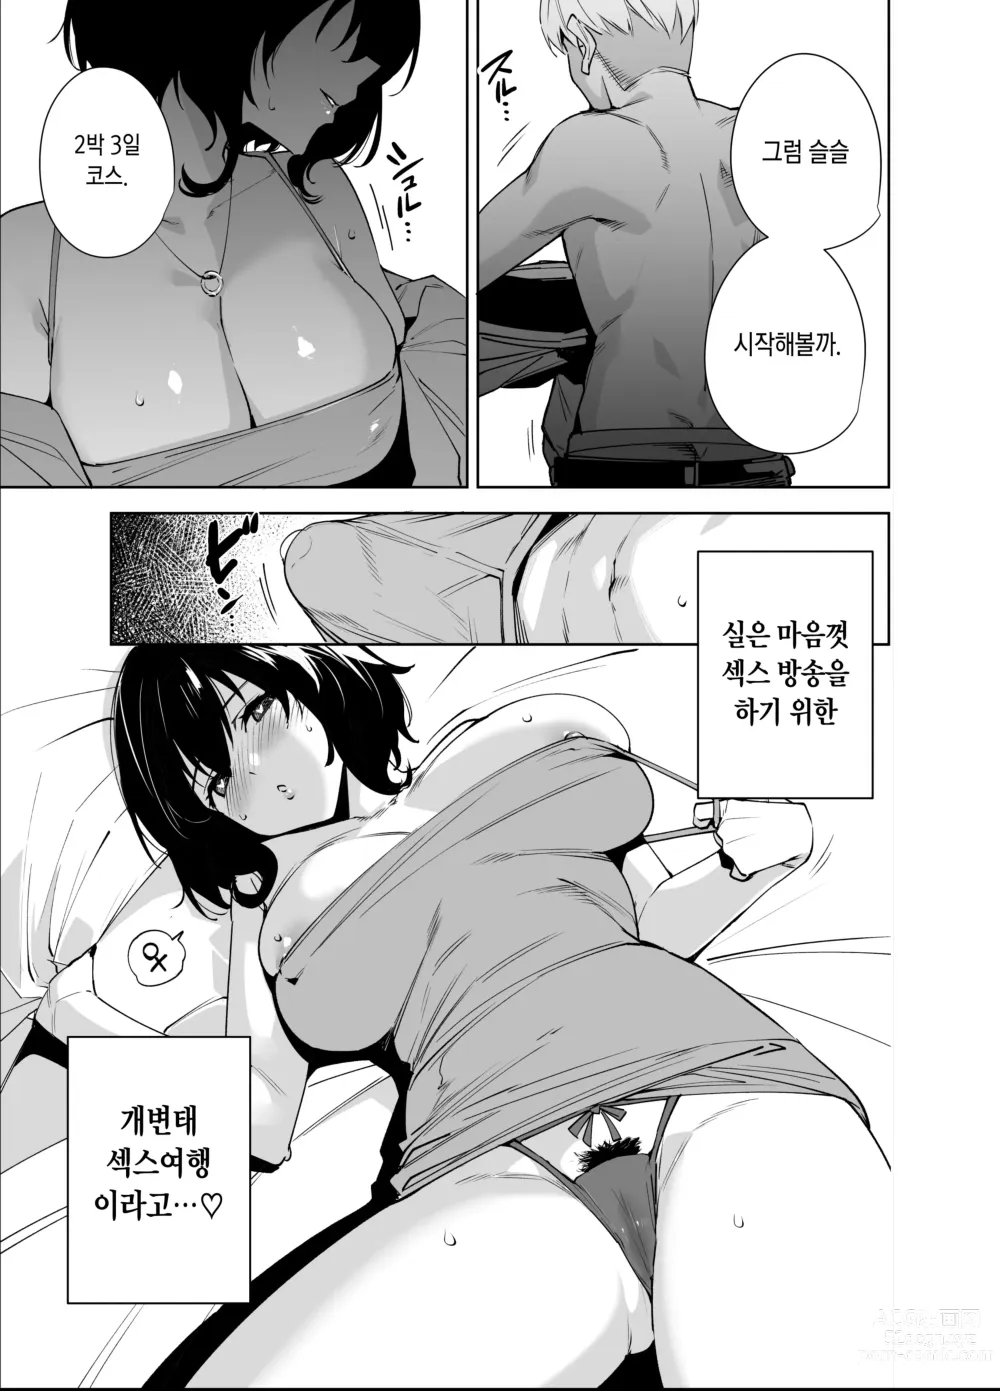 Page 7 of doujinshi 비공개 플랜 2